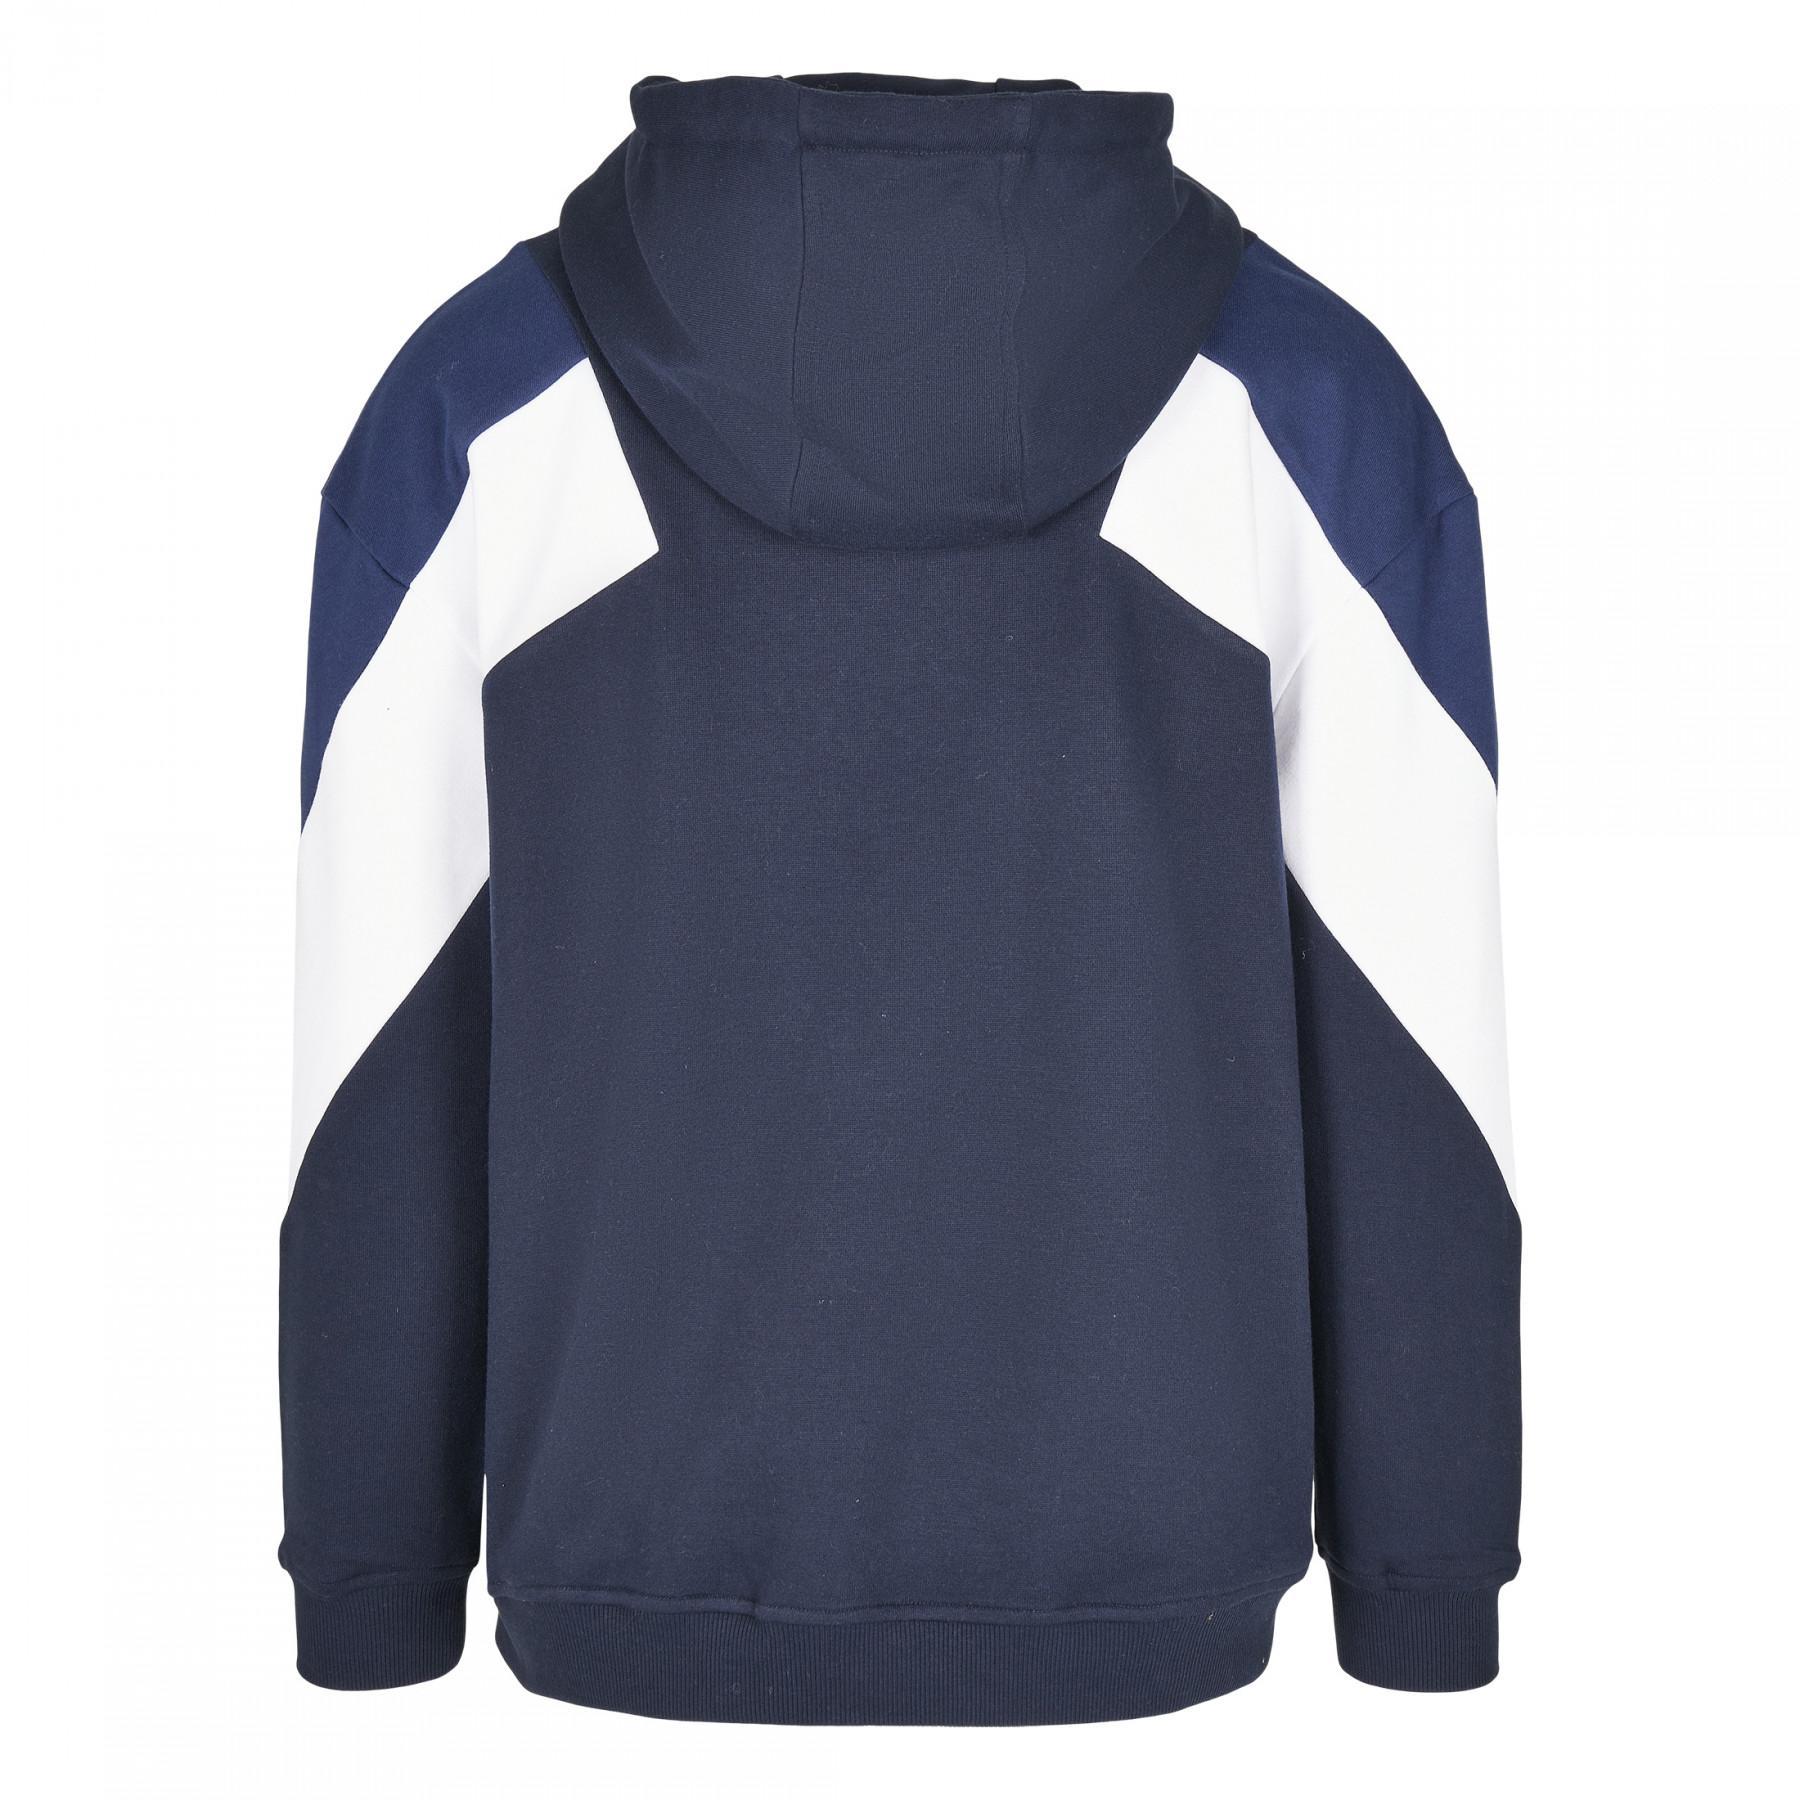 Sweatshirt à capuche Urban Classics oversize 3-tone (grandes tailles)